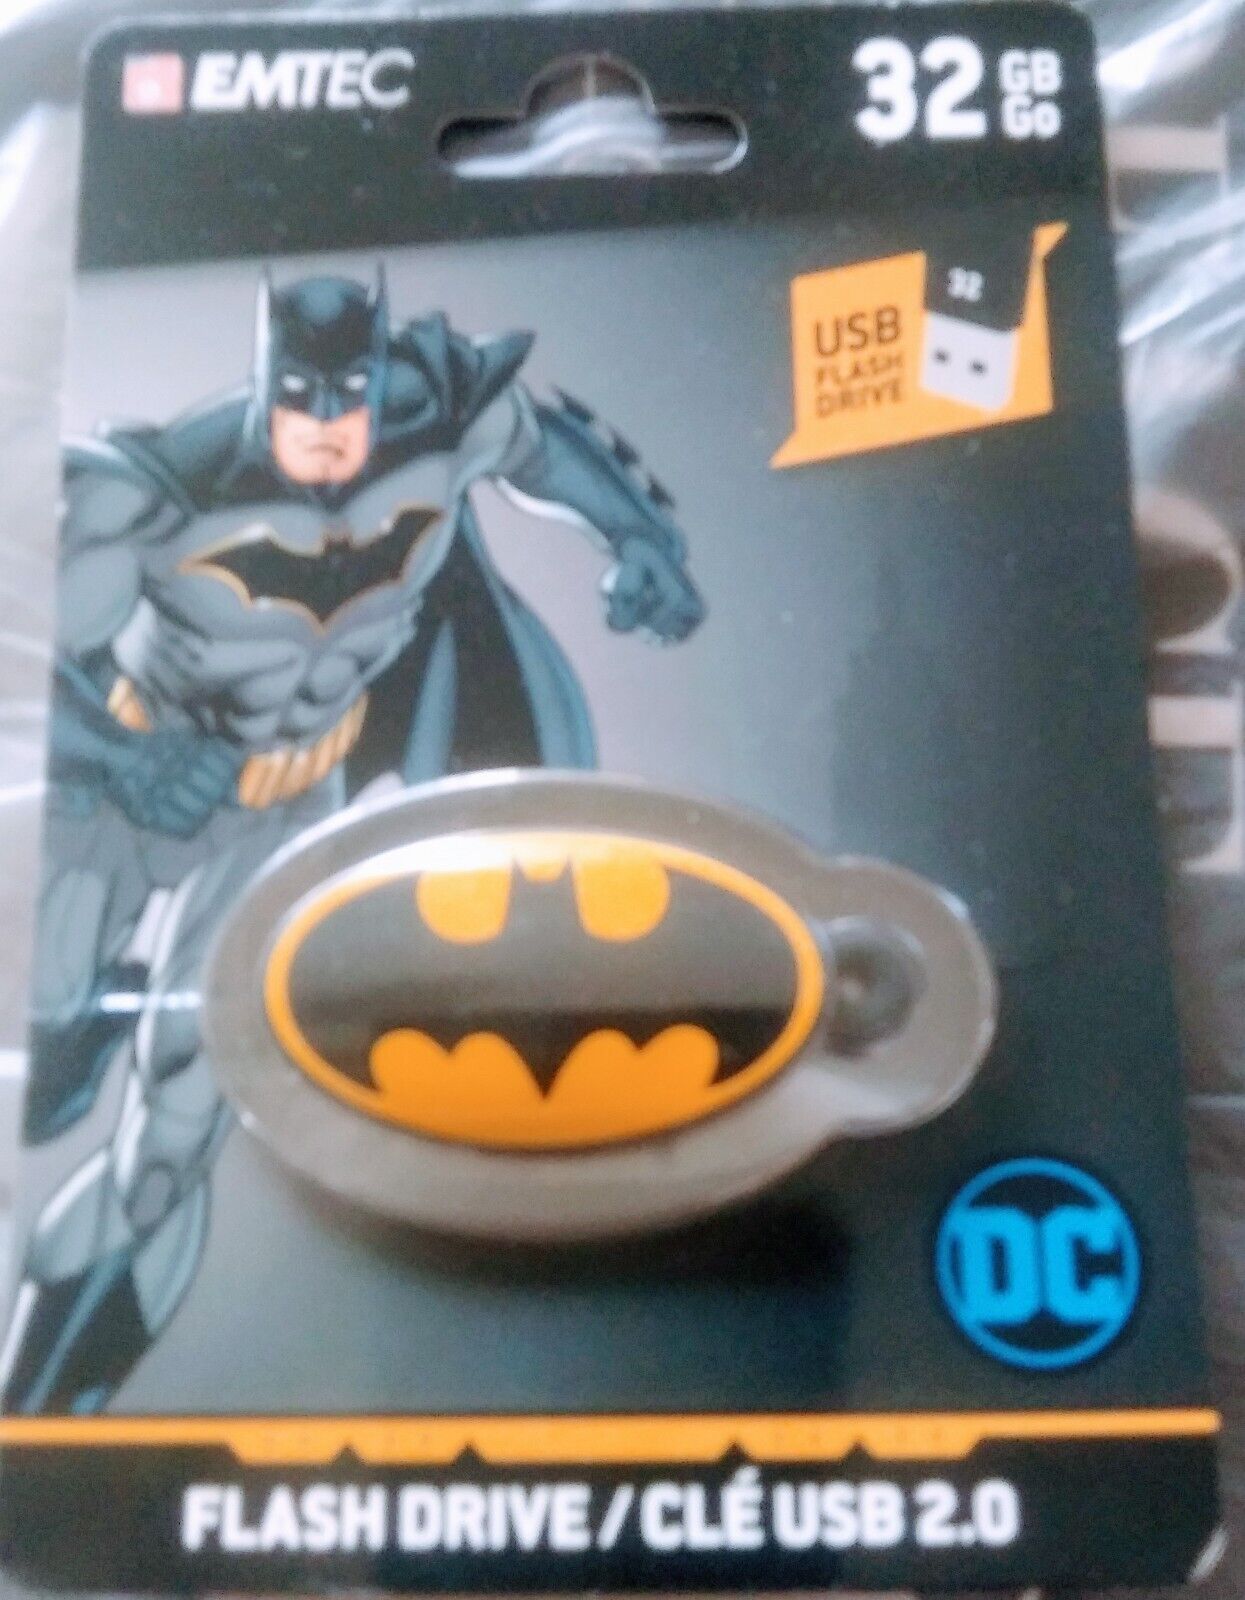 Batman Flash Drive Keychain Emtec DC Comics USB 32GB Marvel Superman too